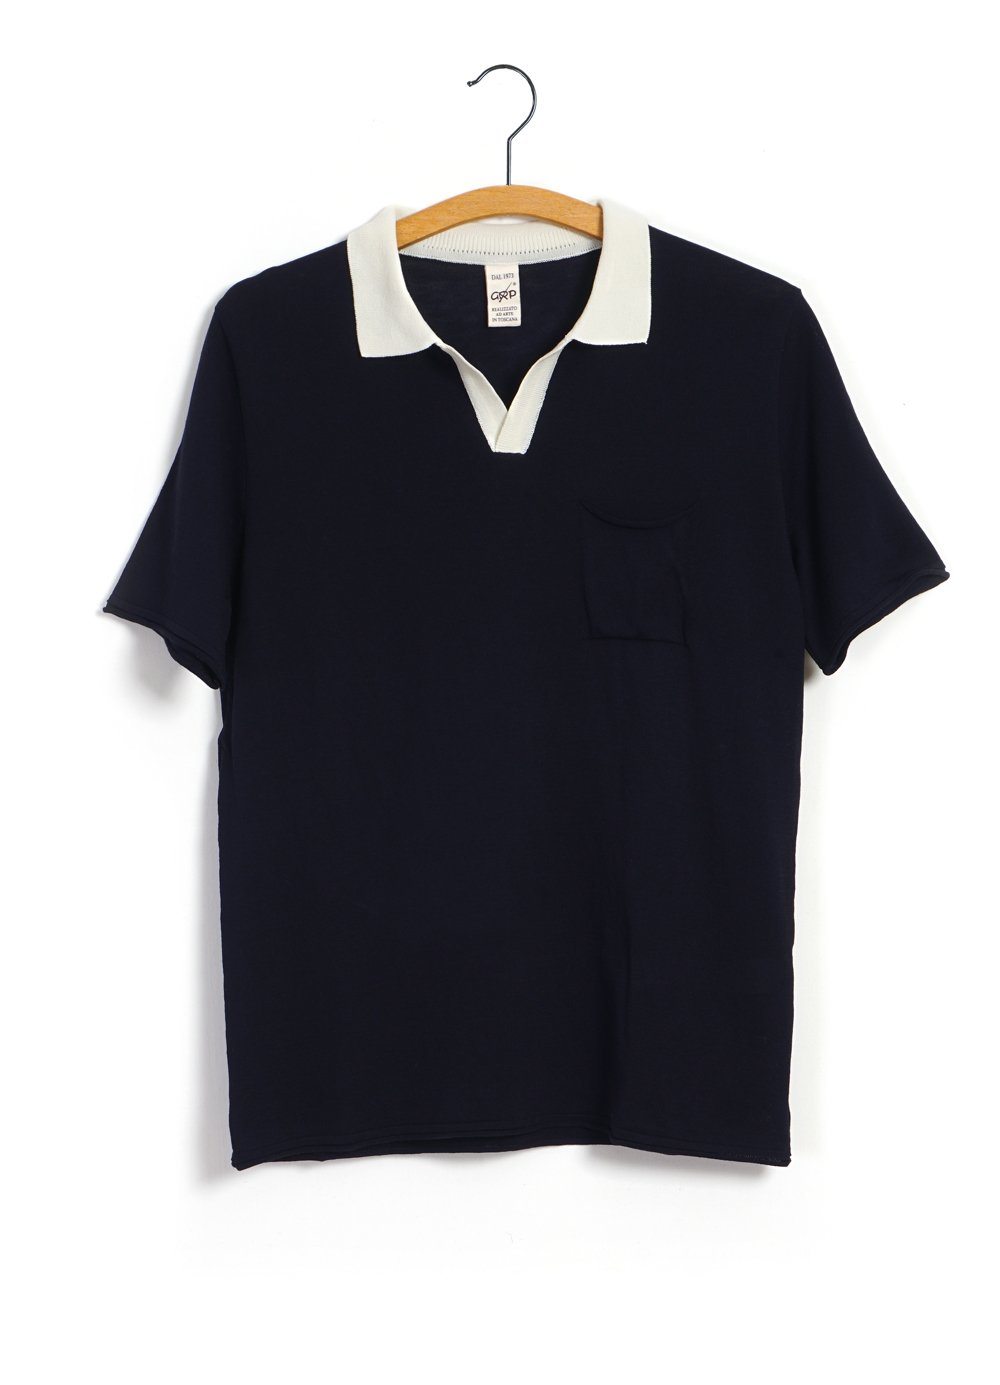 G.R.P - POLO | Short Sleeve Knit Shirt | Navy Ecru - HANSEN Garments